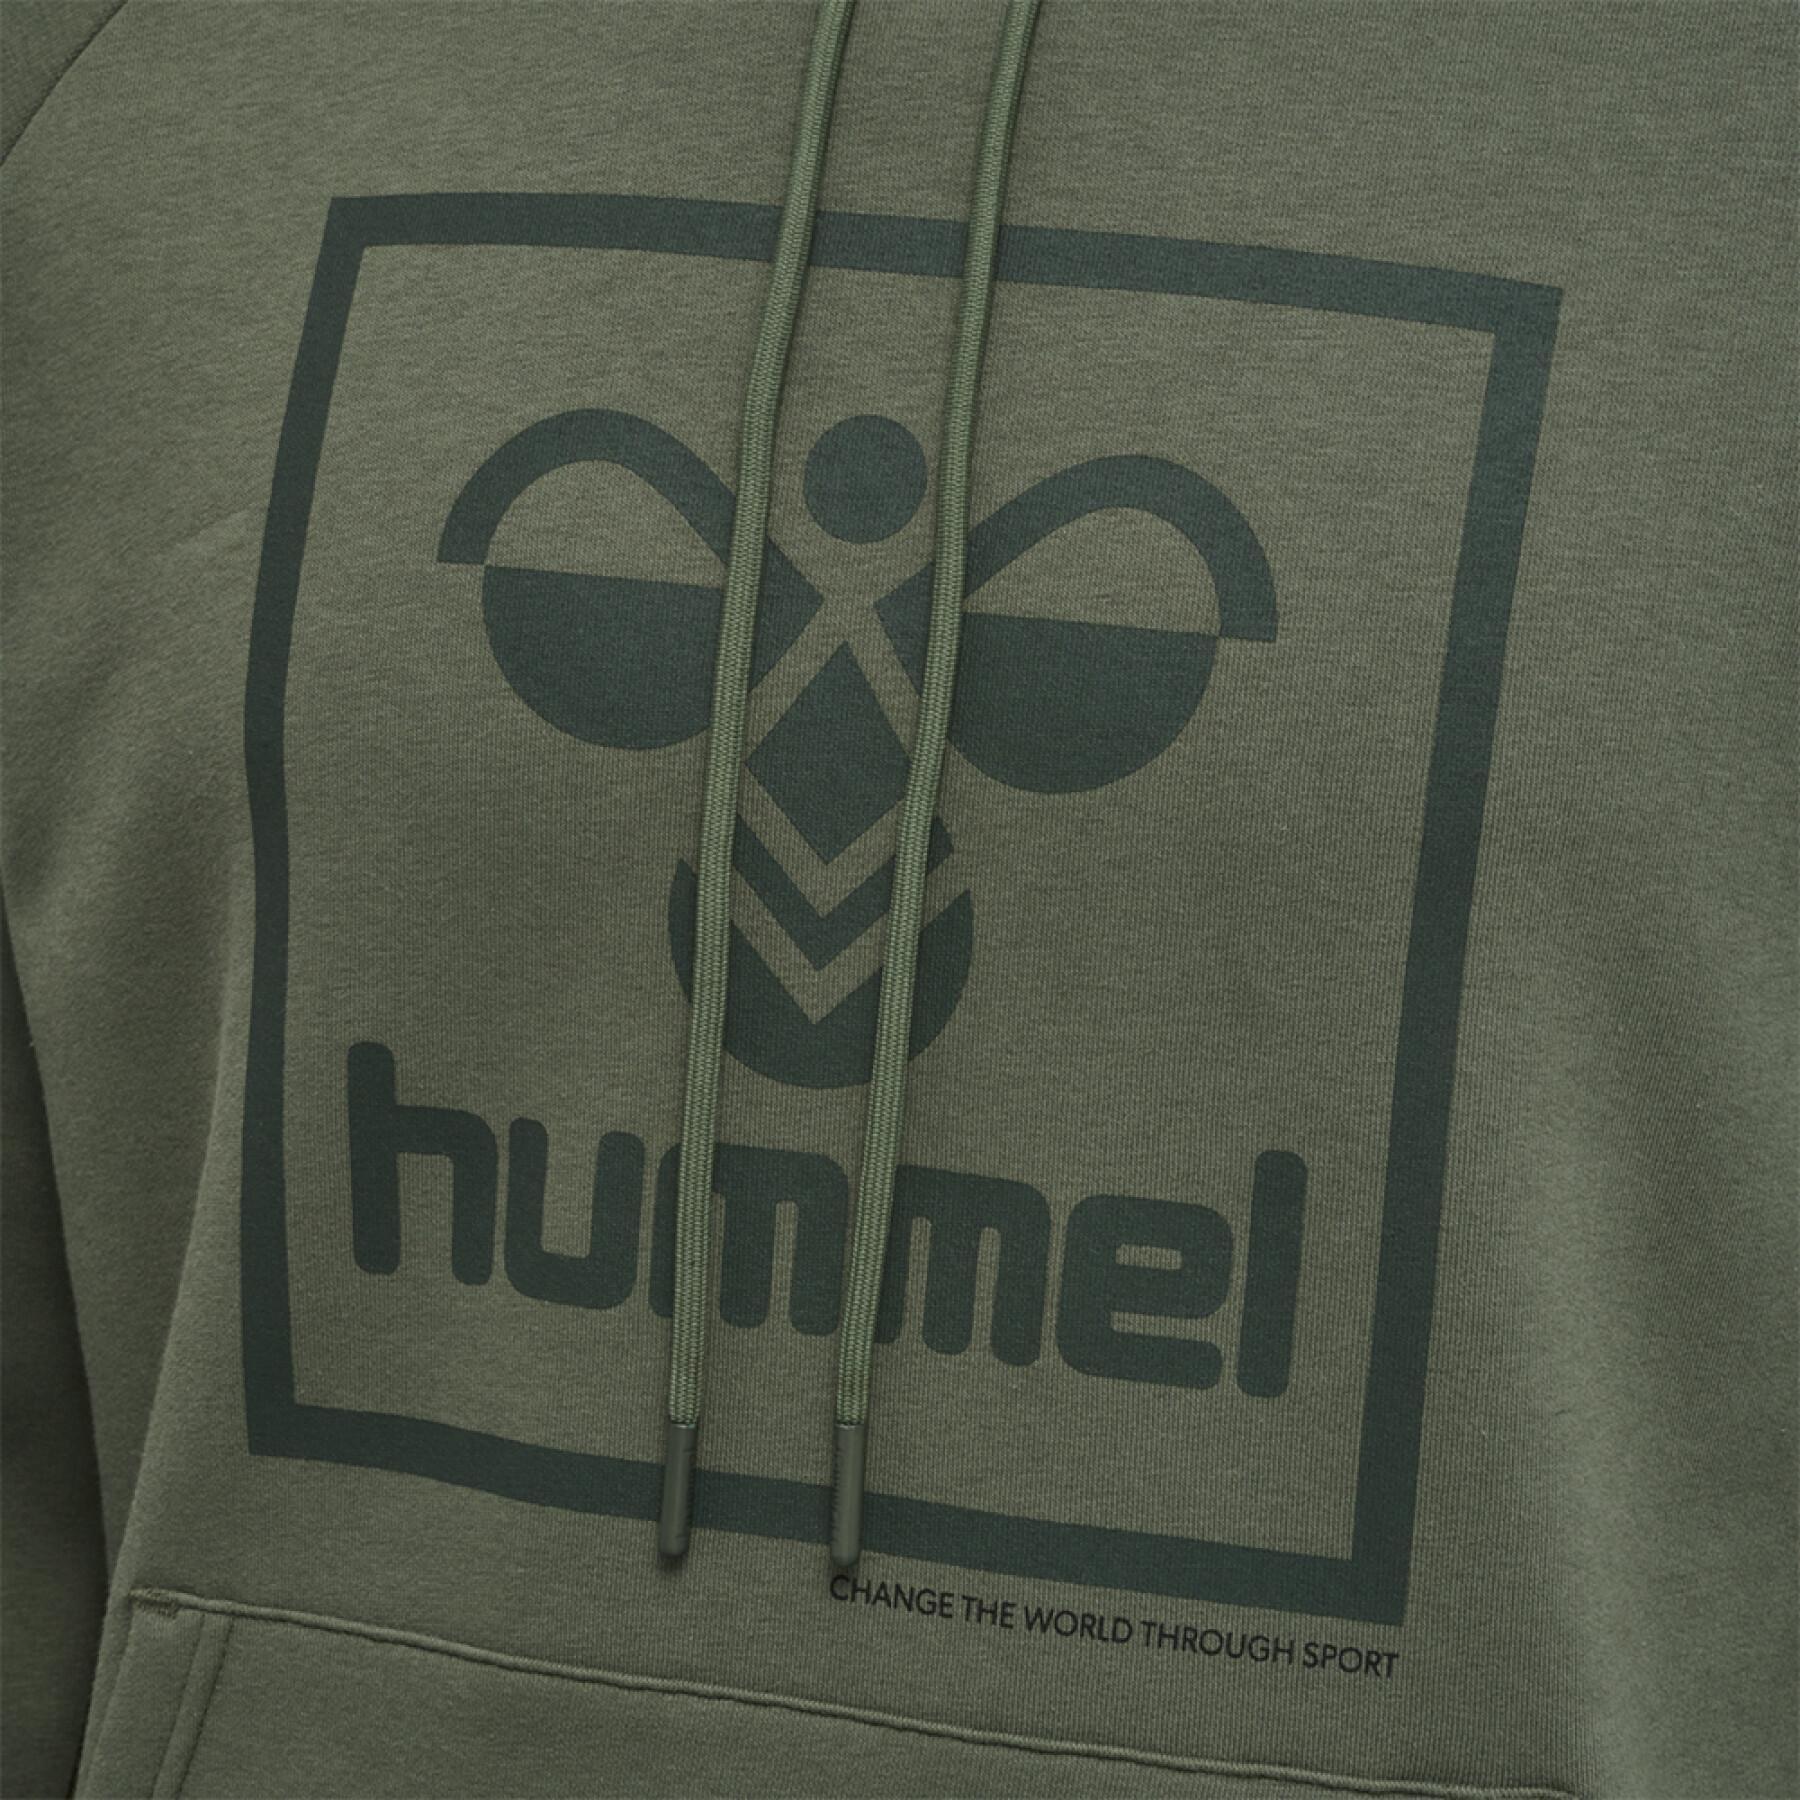 Sweatshirt Hummel hmlISam